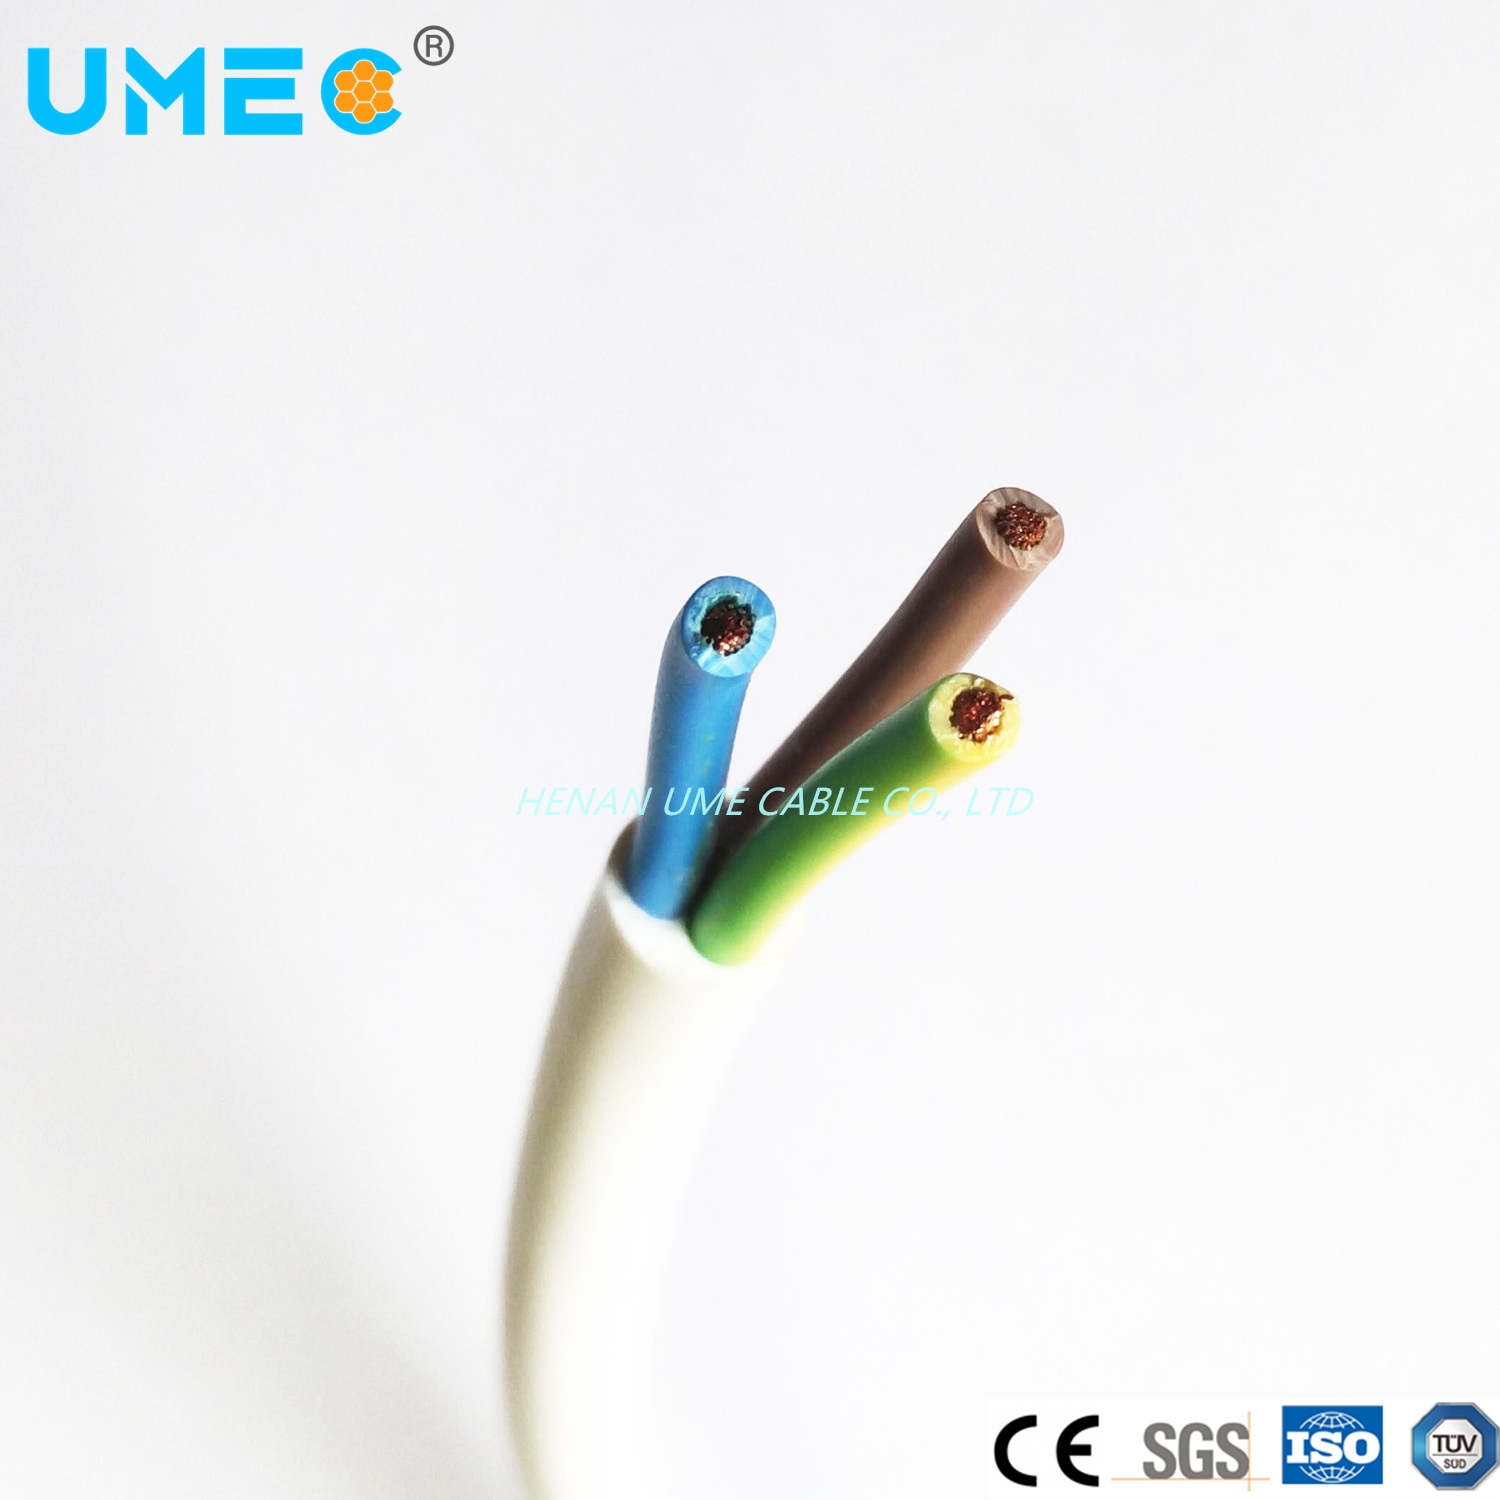 
                Eléctrica Extruida PVC aislado Myym H05VV-F A05VV-F redondo y plano Cable de cobre 2x0,75 mm2 3X0,5 mm2 cable eléctrico
            